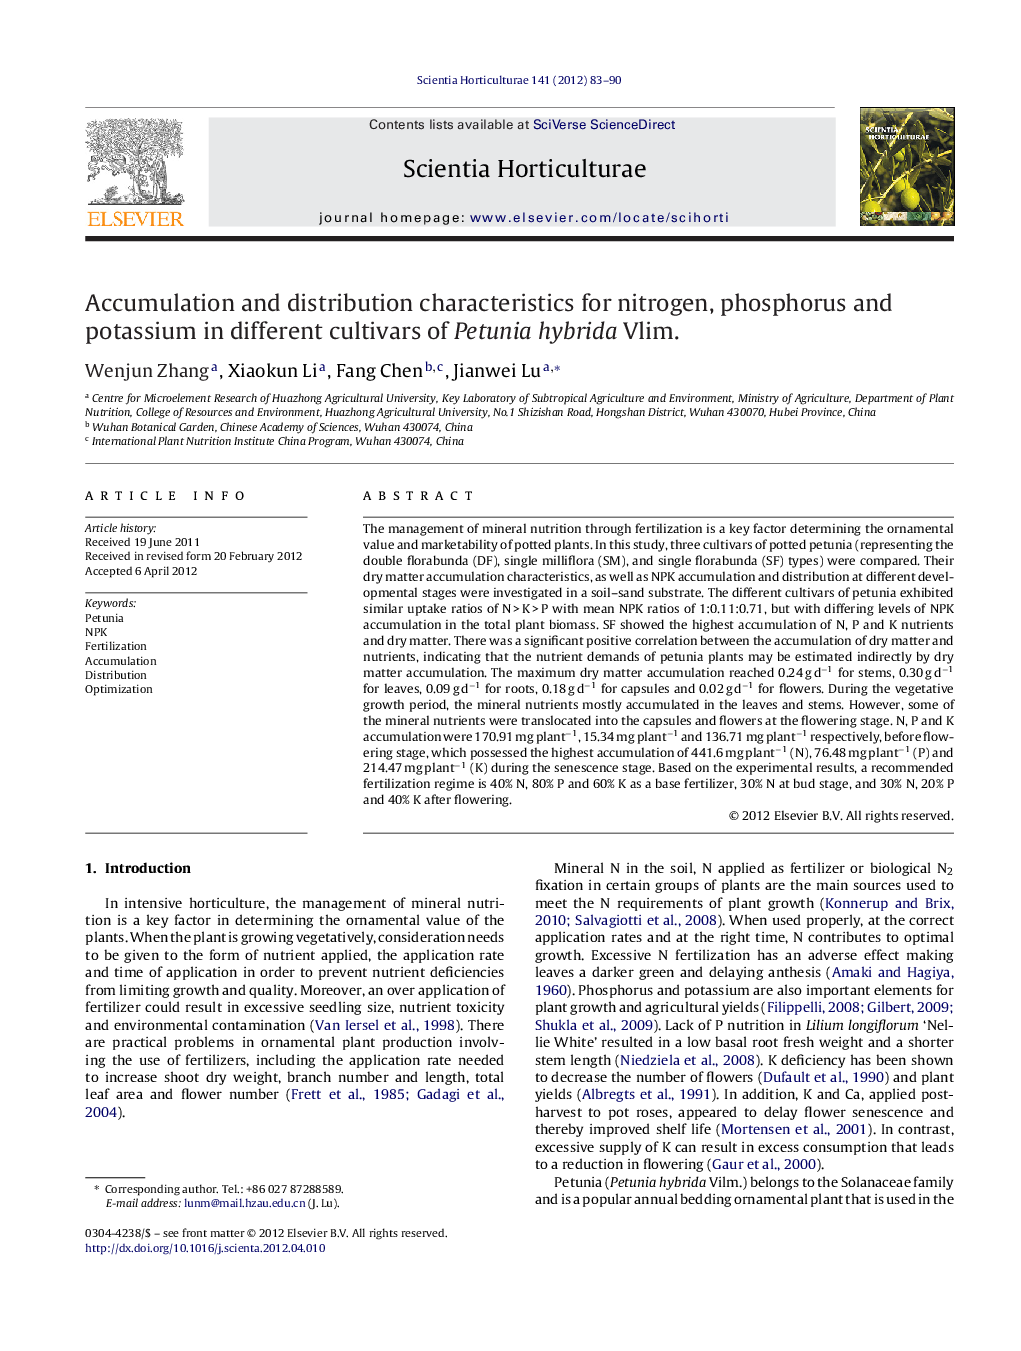 Accumulation and distribution characteristics for nitrogen, phosphorus and potassium in different cultivars of Petunia hybrida Vlim.